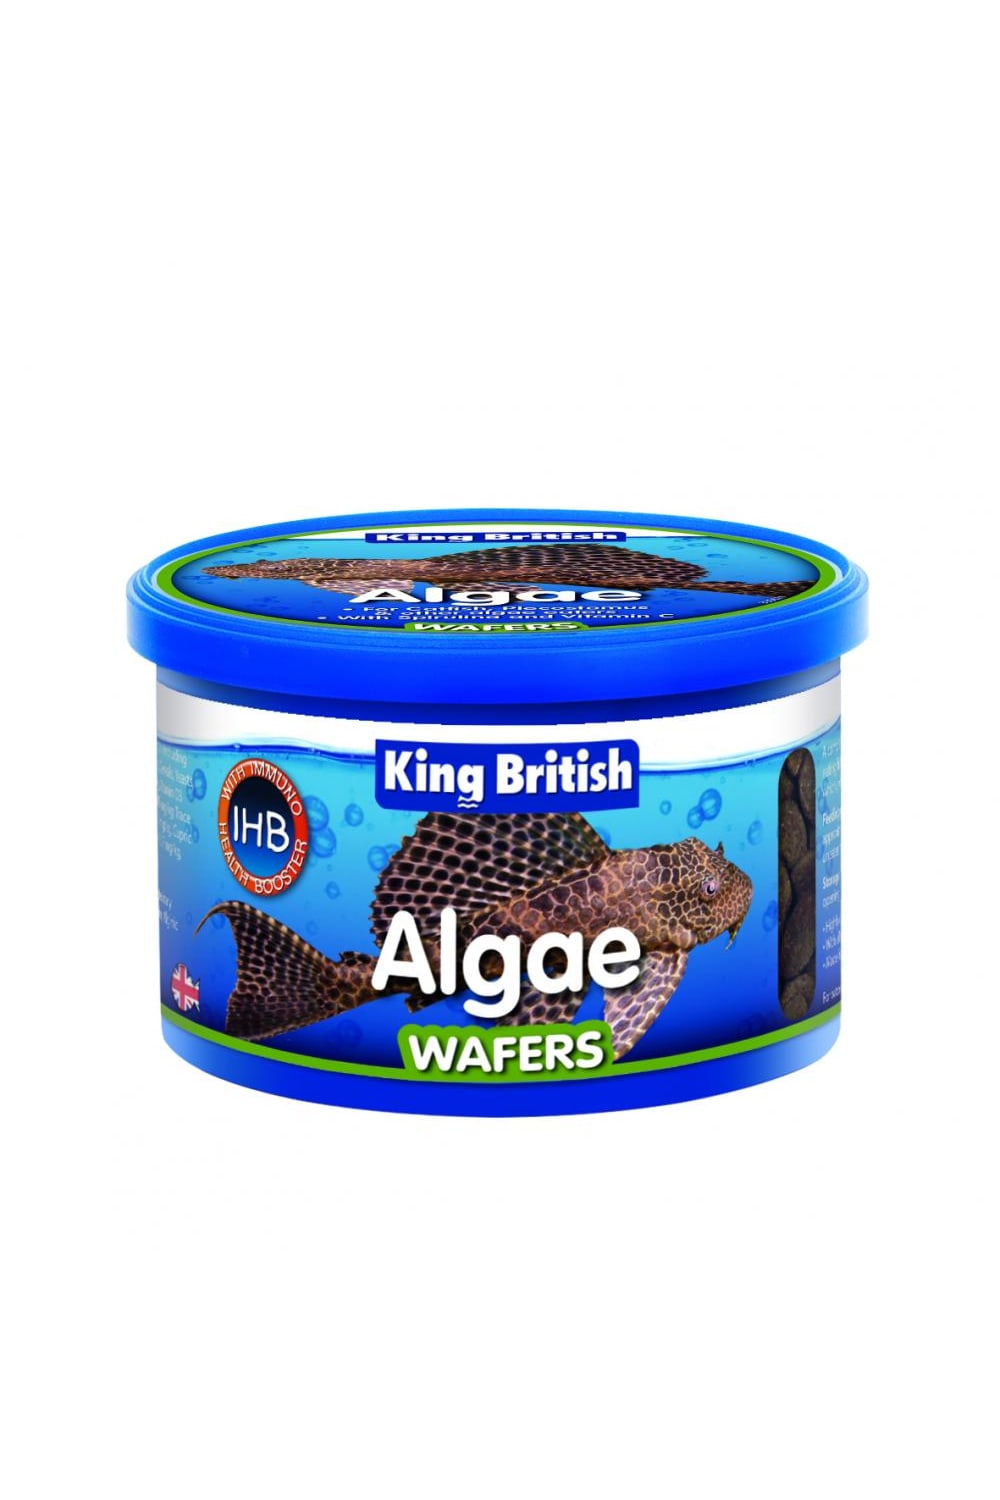 King British Algae Wafers (May Vary) (3.5oz)